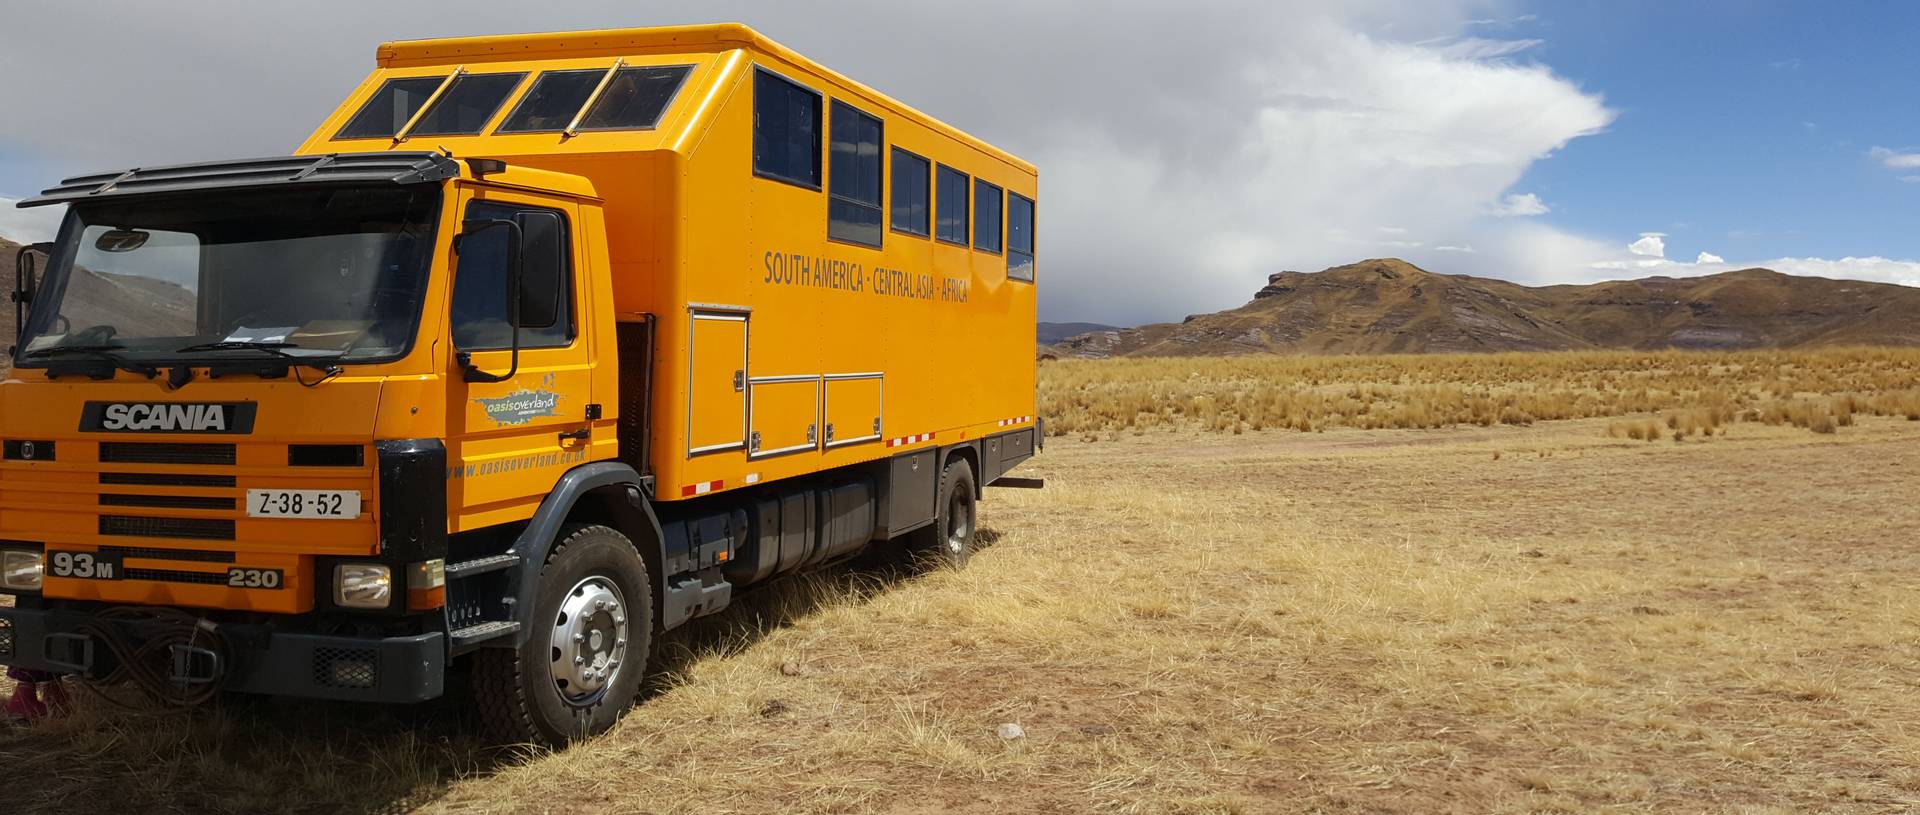 Truck In The Vast Wilderness Of Peru